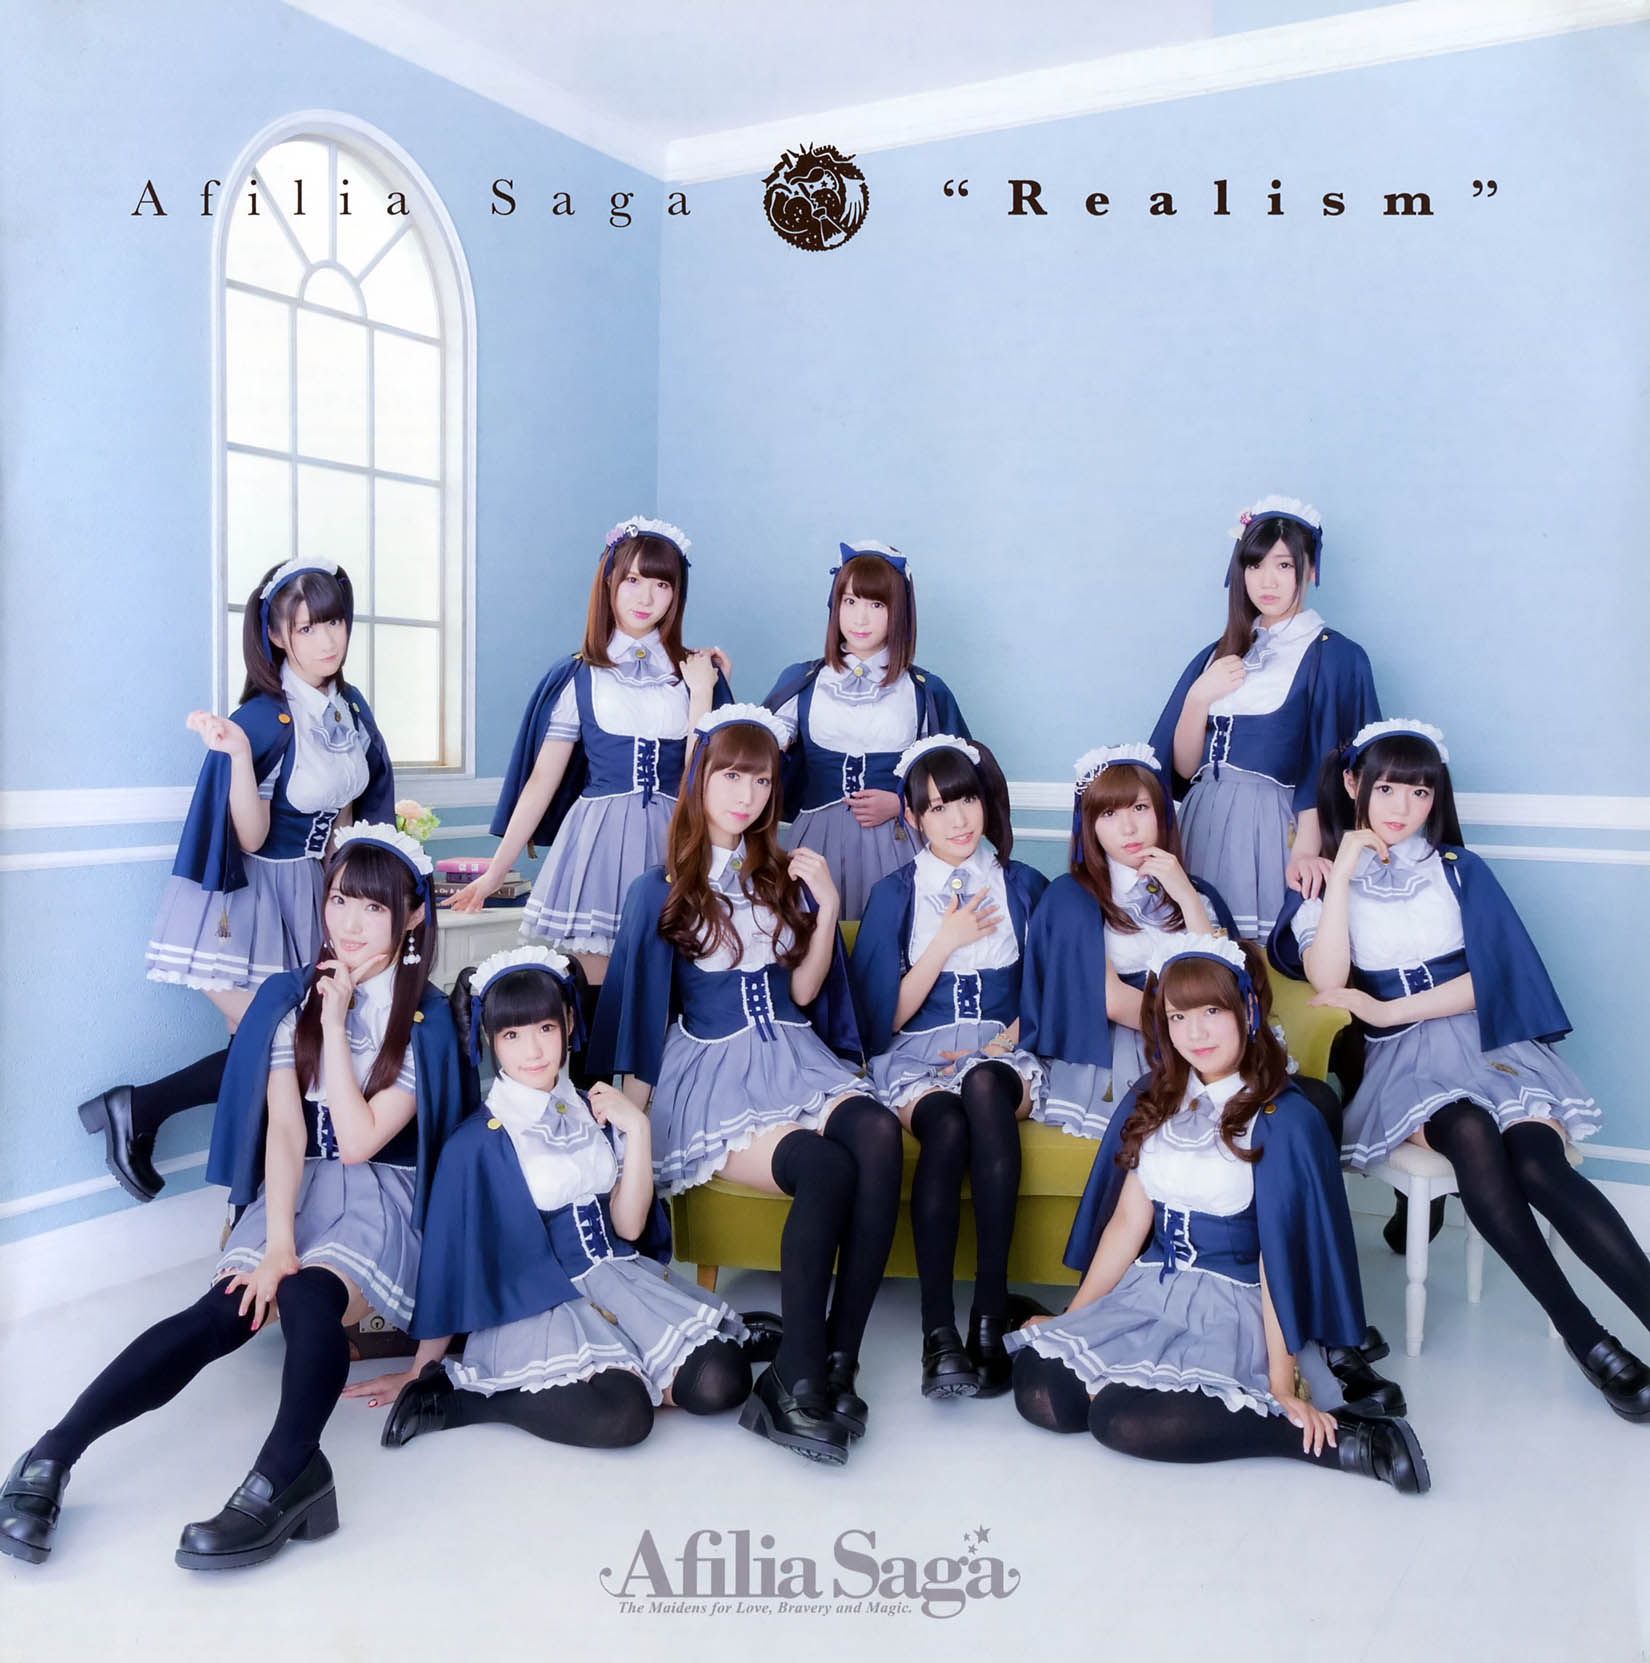 20170107.14.51 Afilia Saga - Realism (Deluxe edition) cover.jpg